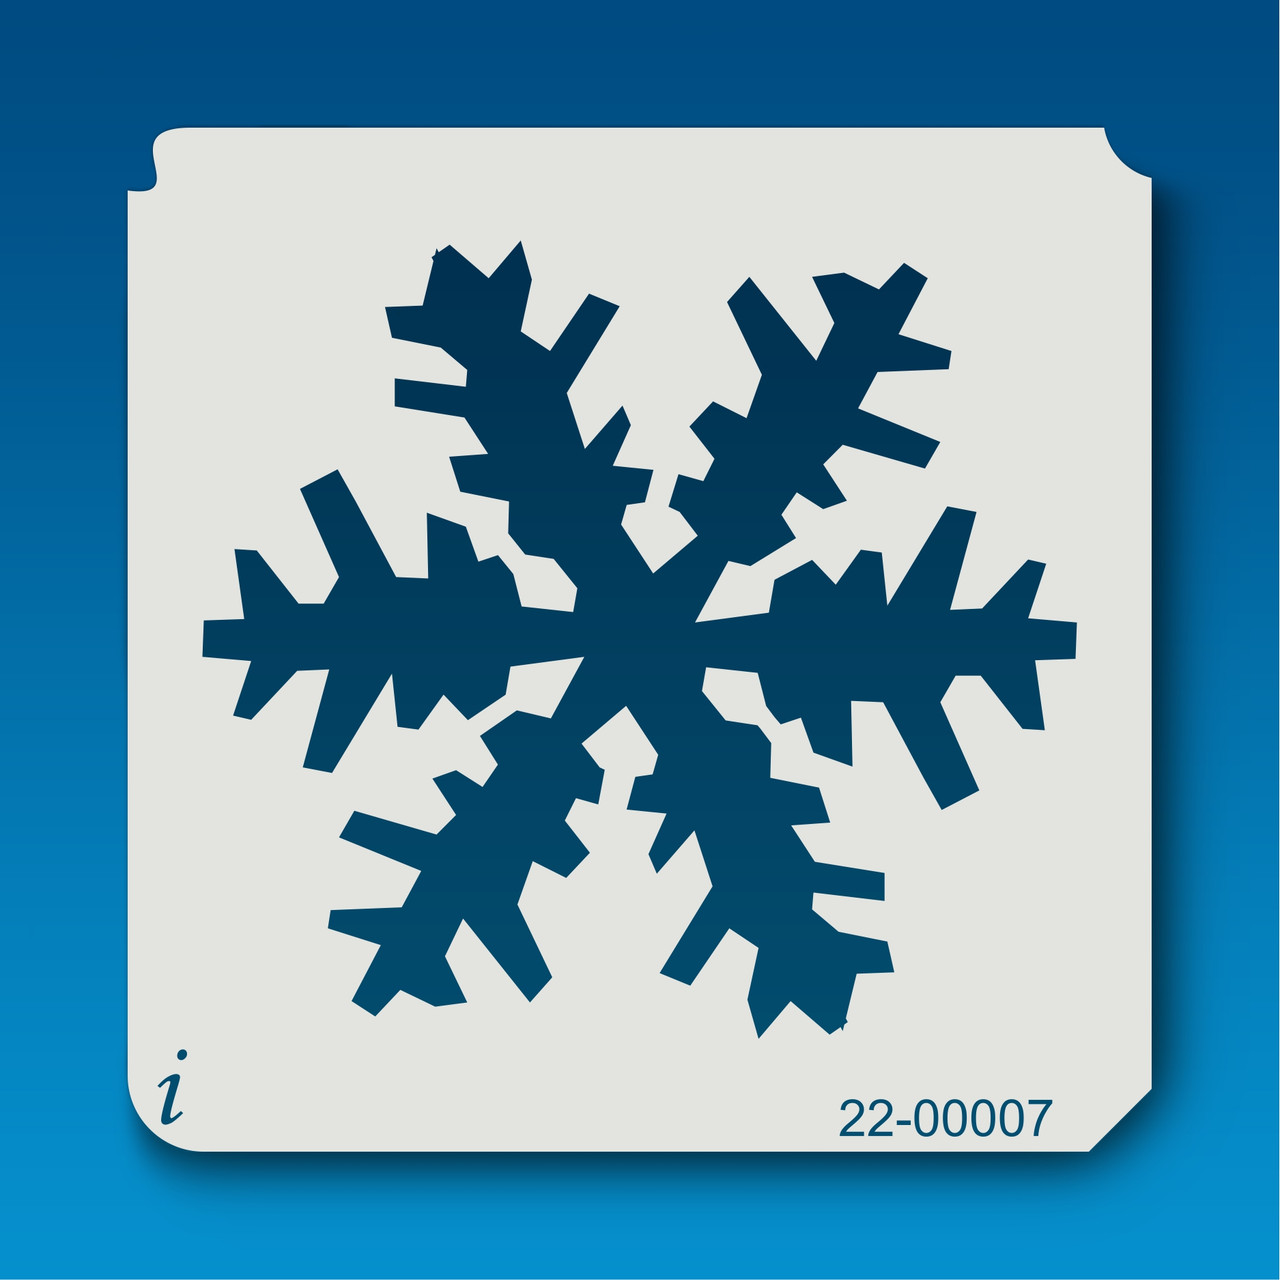 Wholesale FINGERINSPIRE Snowflake Stencils 30x30cm Christmas